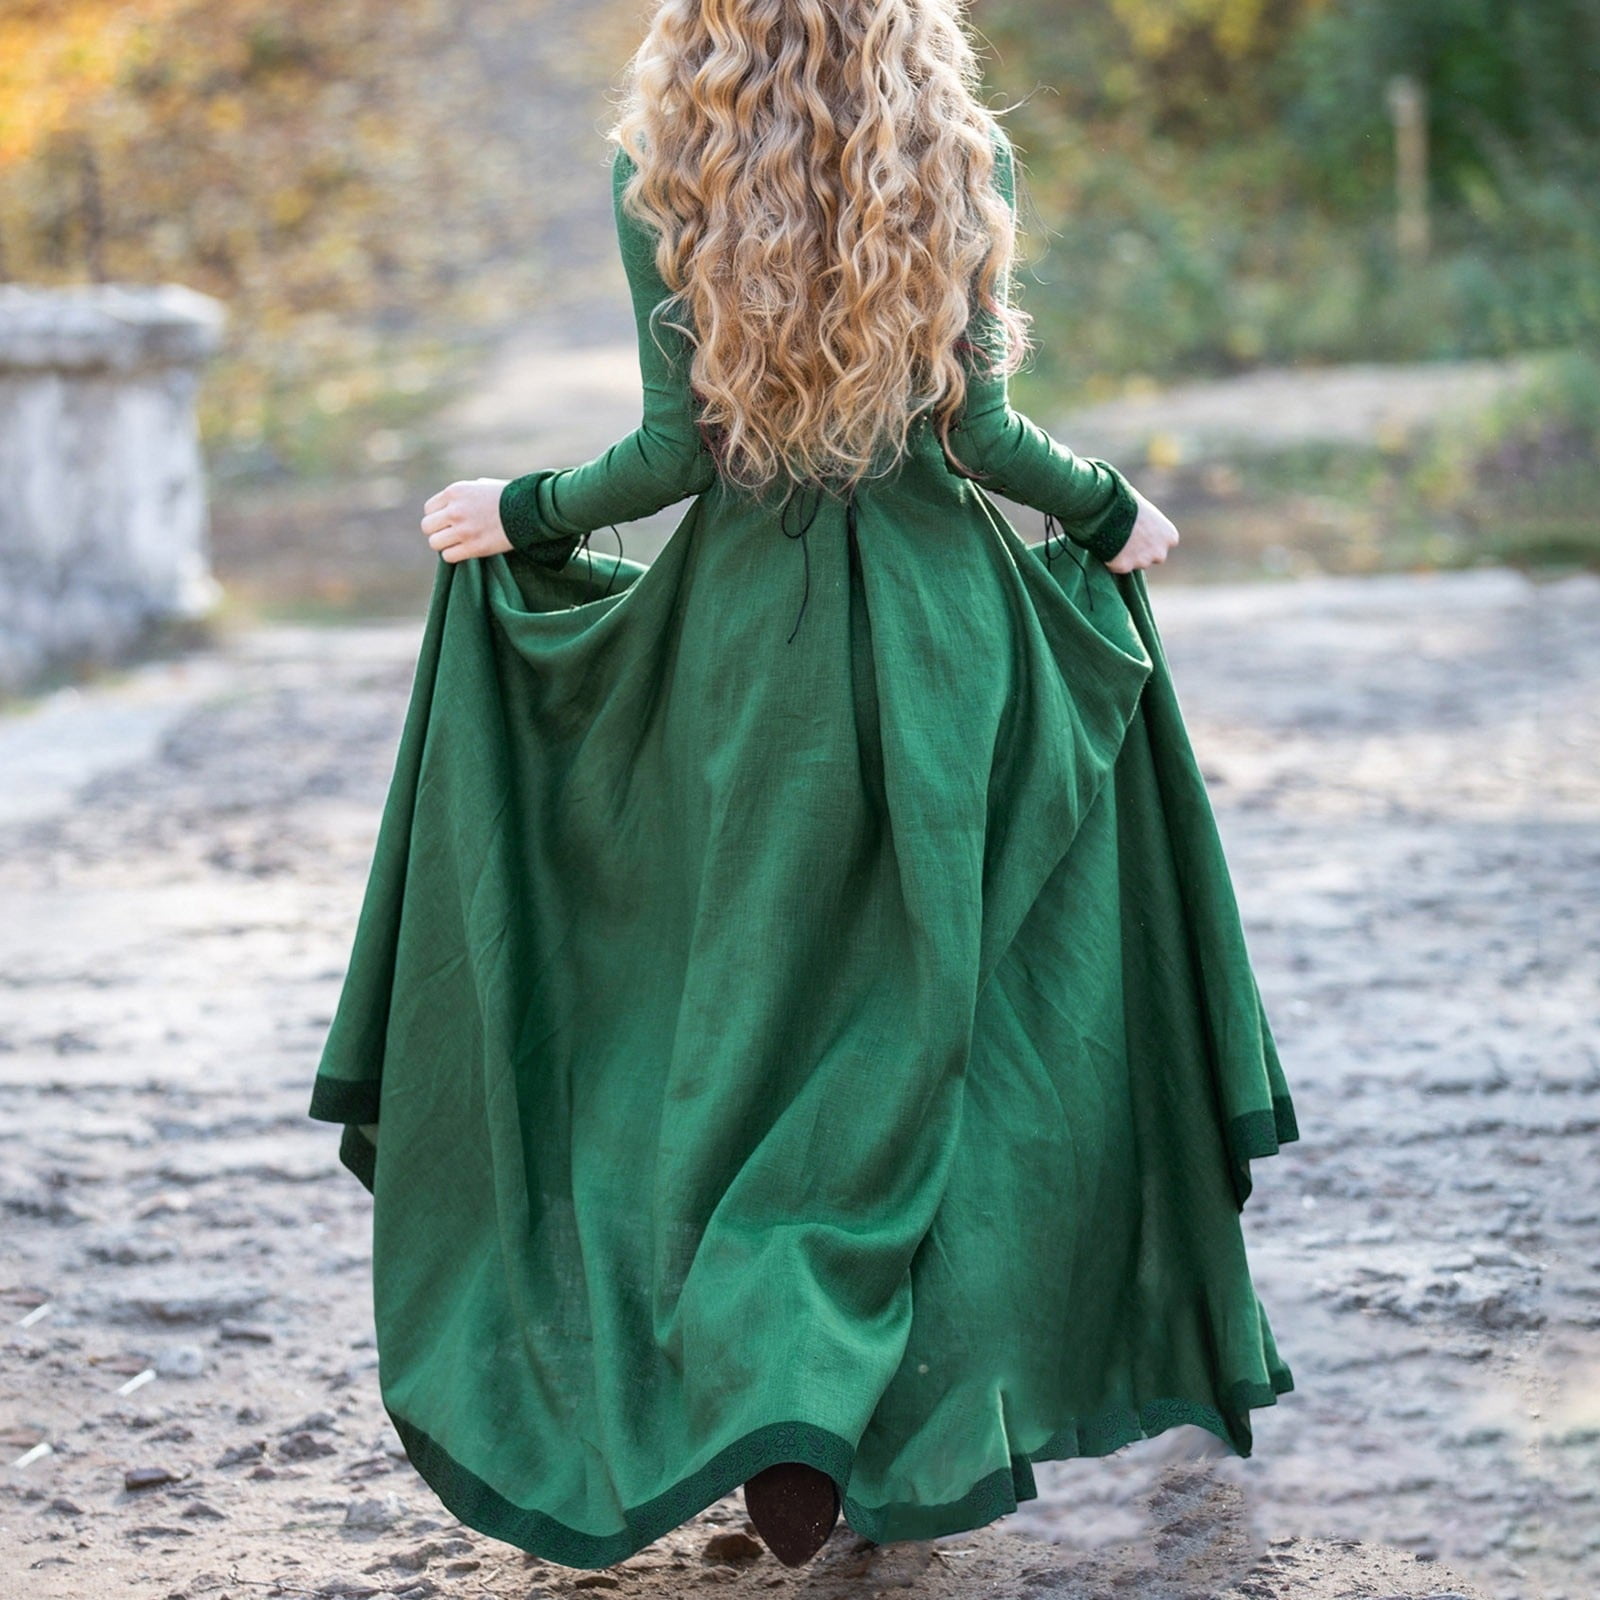 Enchanted Garden Fairy dress - Karen Sloan | wallflowerstudi… | Flickr